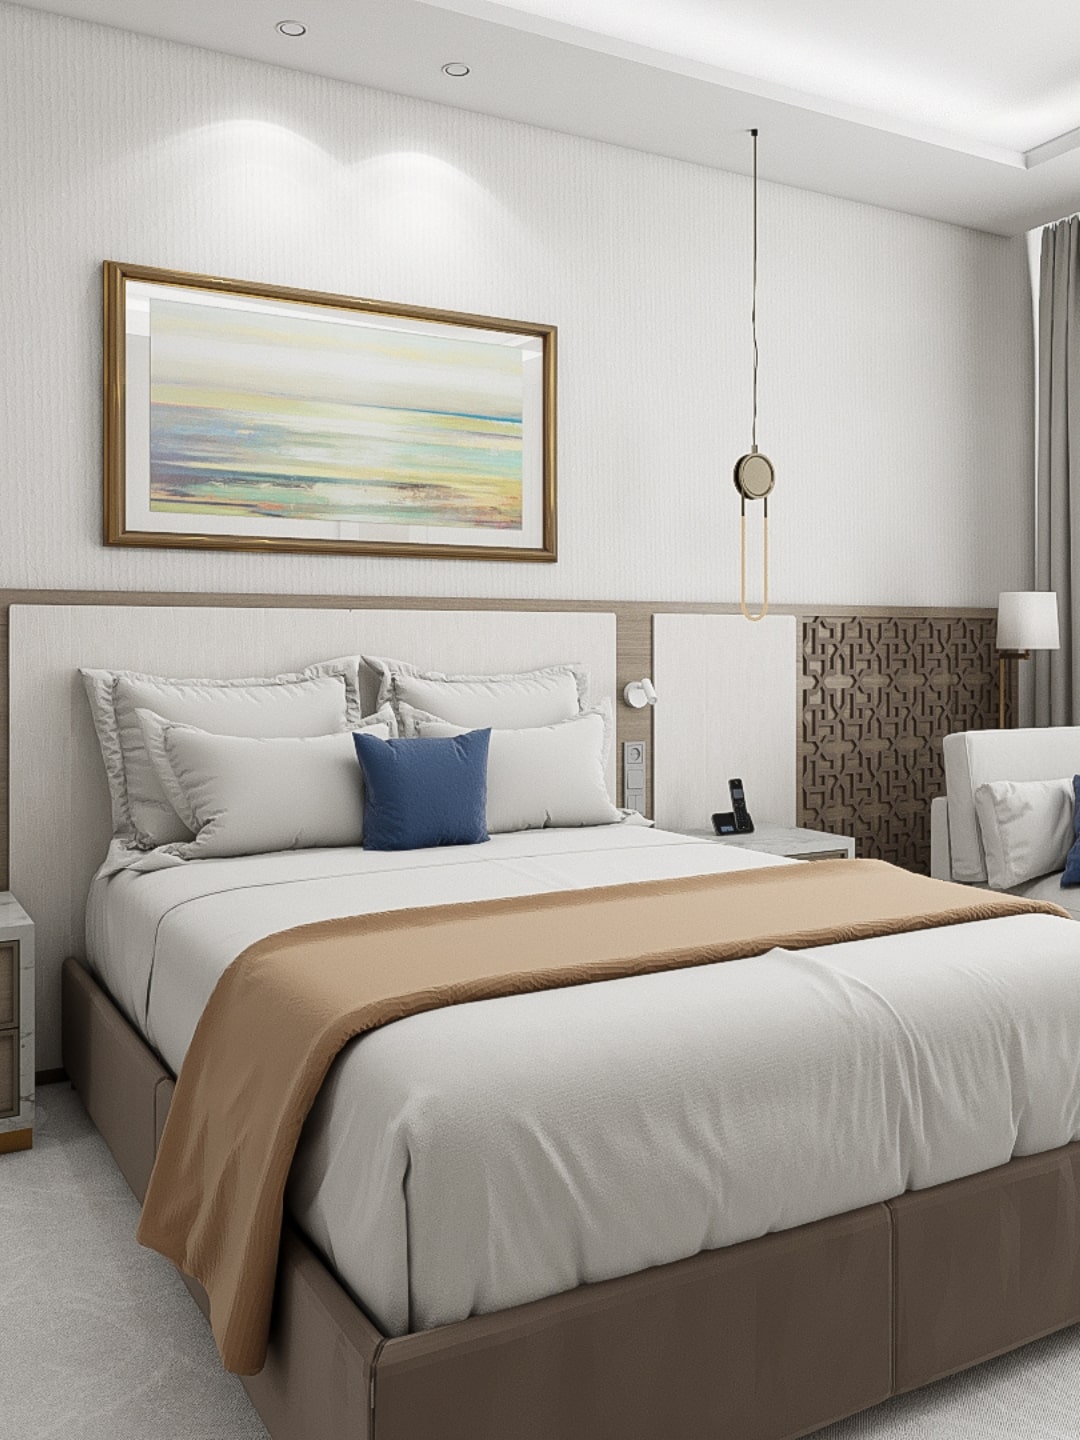 Dormitor de hotel amenajat in stil minimalist si cu o vedere catre mare.